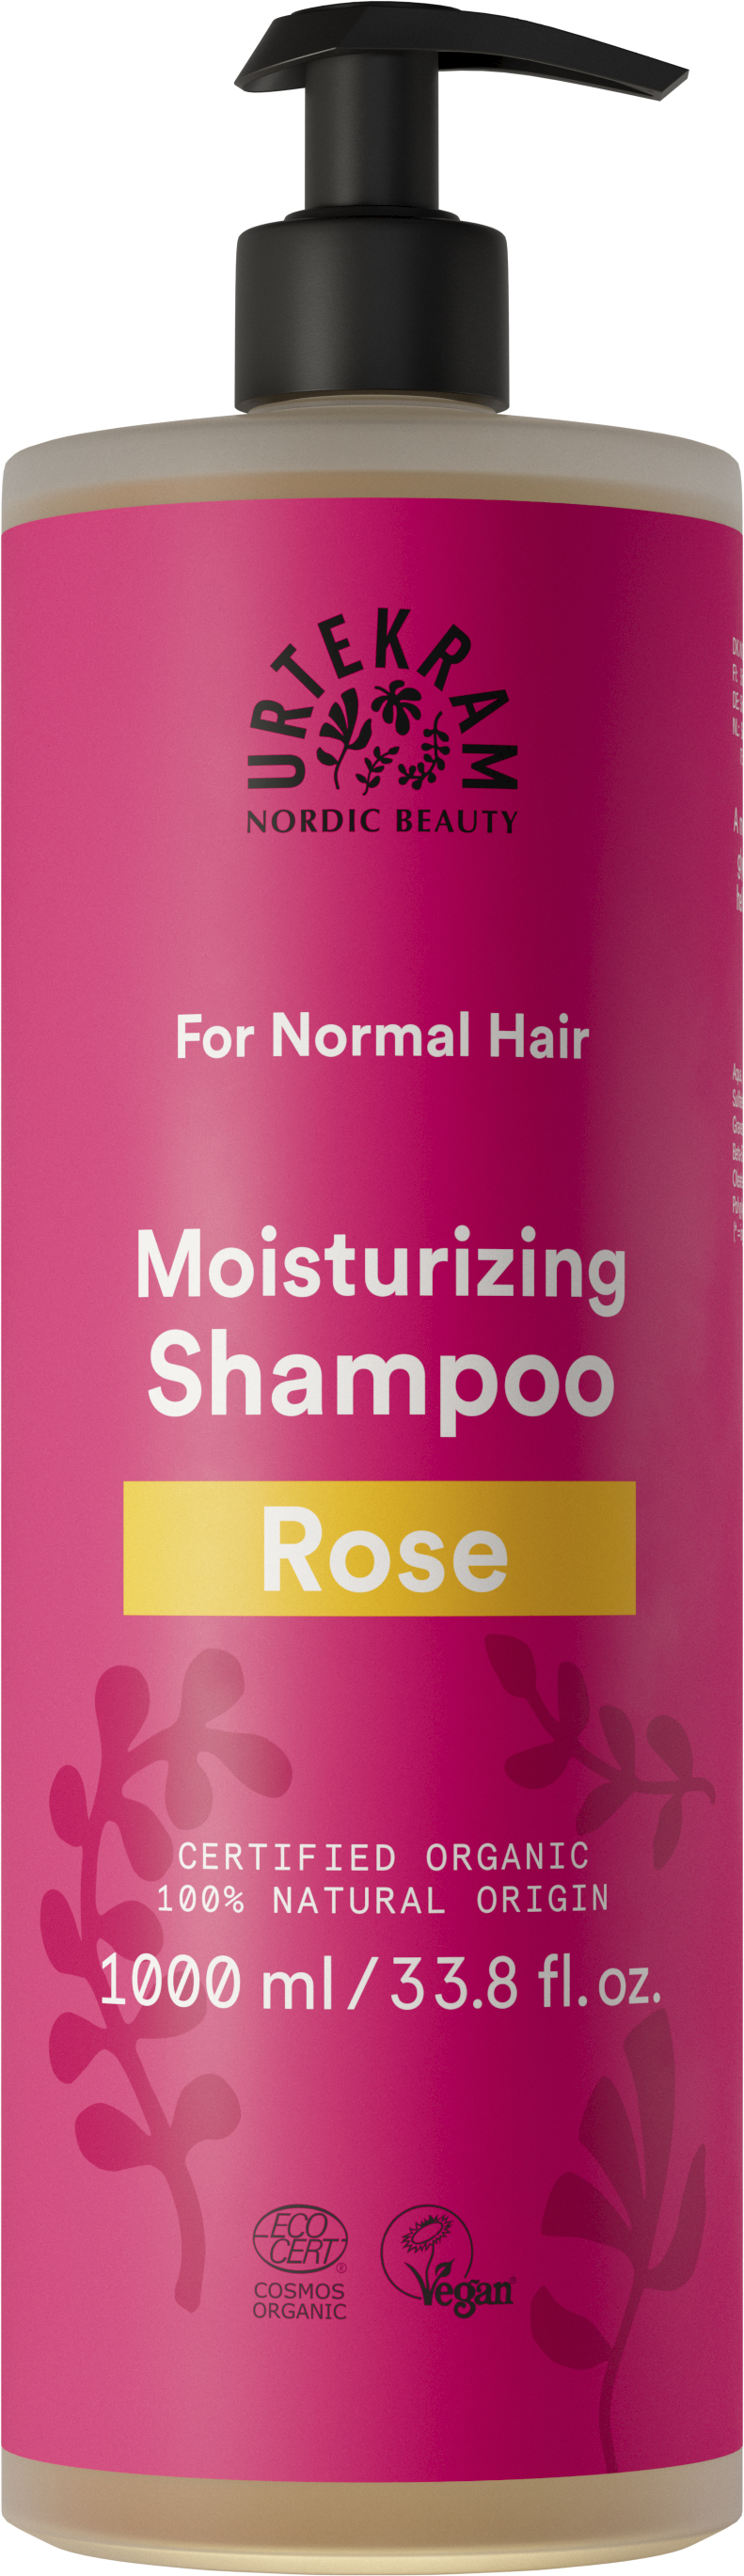 Rose Shampoo 1000 ml  Normales Haar  Urtekram